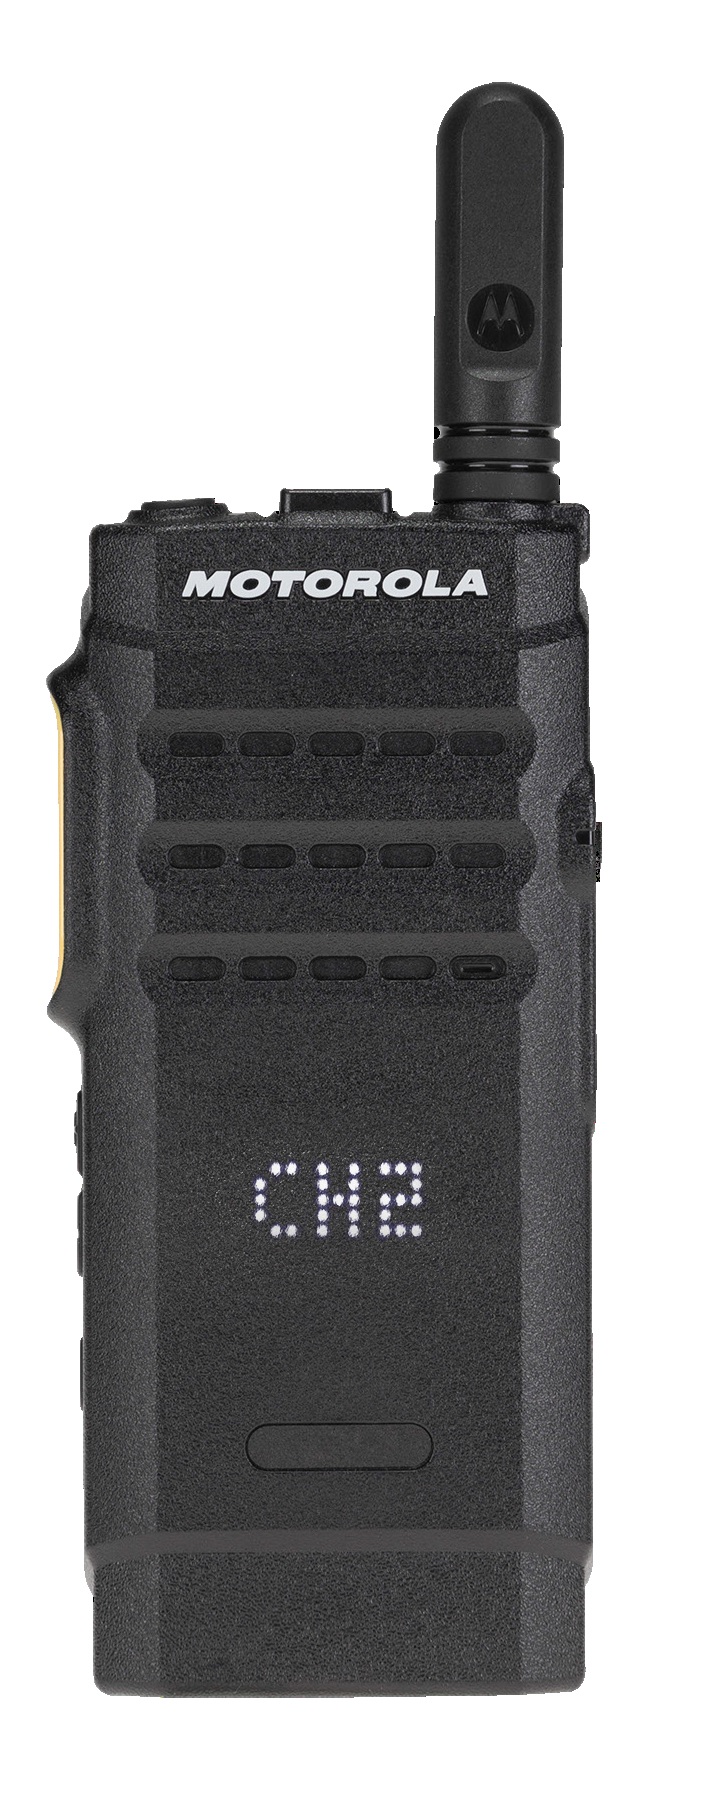 Motorola SL300, UHF (403-470 MHz), 3 Watts, 99 Channels, Digital/Analog Radio, Display Model